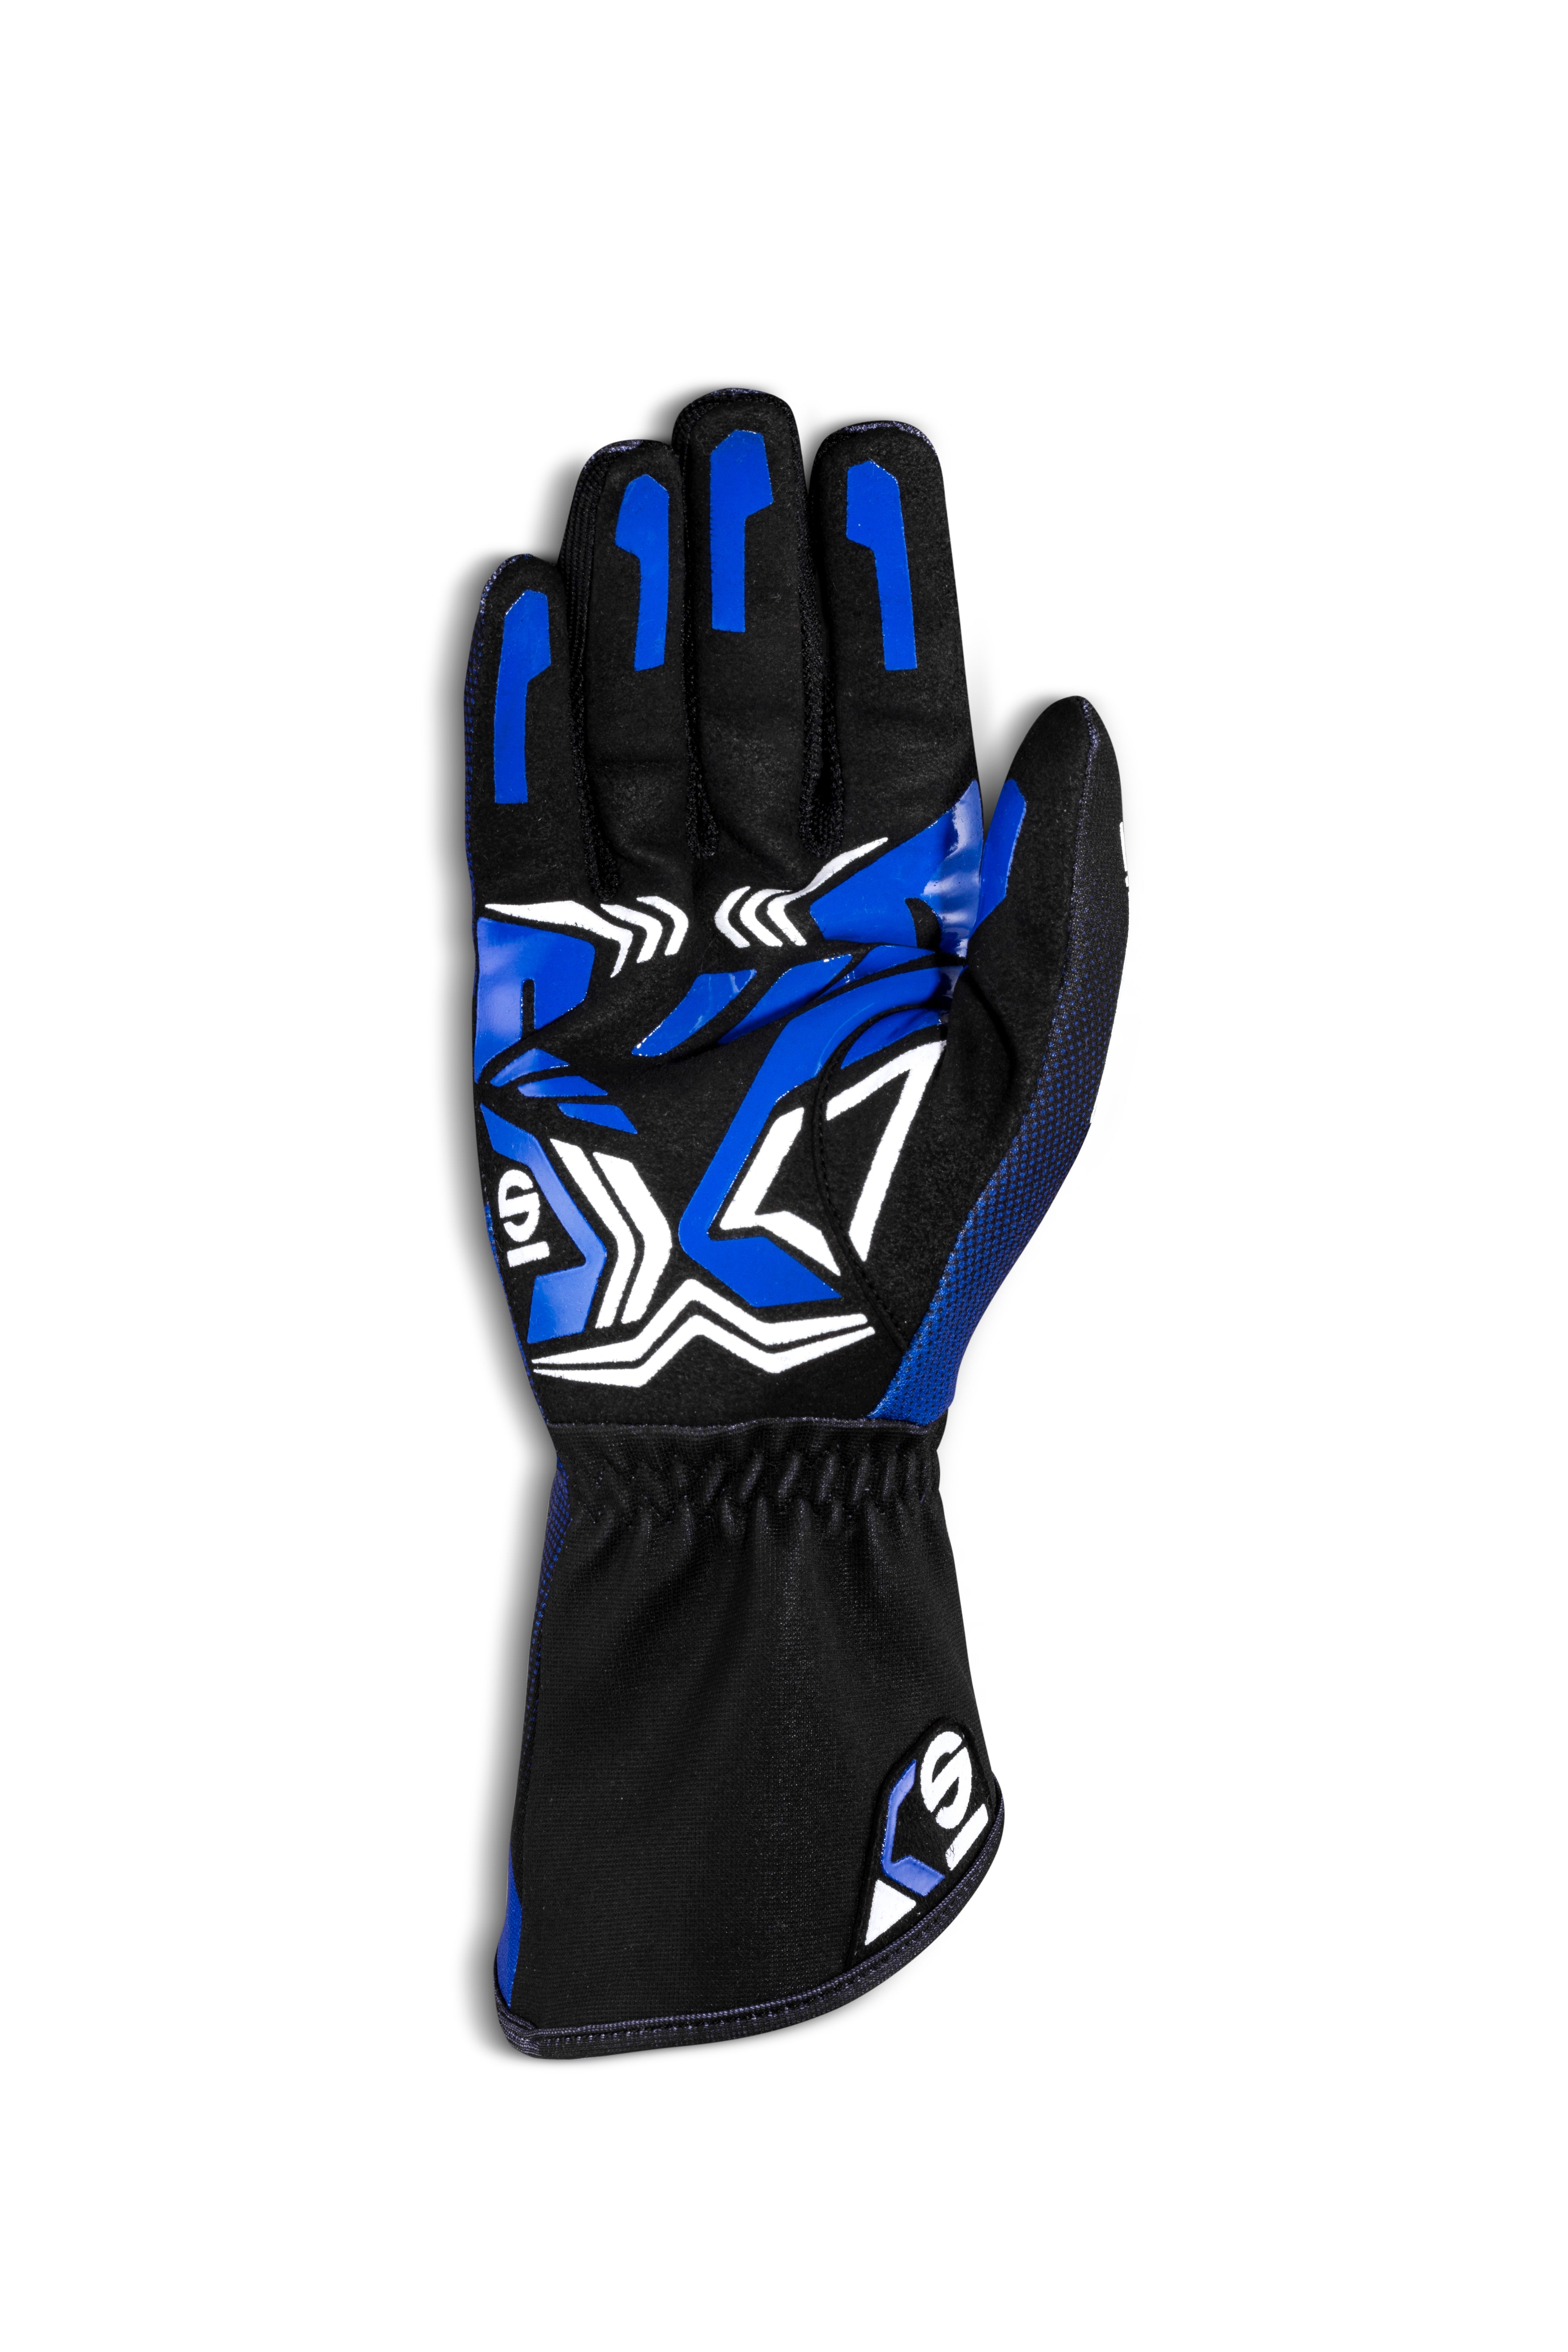 SPARCO 00255612BXNR Kart gloves RUSH, blue/black, size 12 Photo-1 